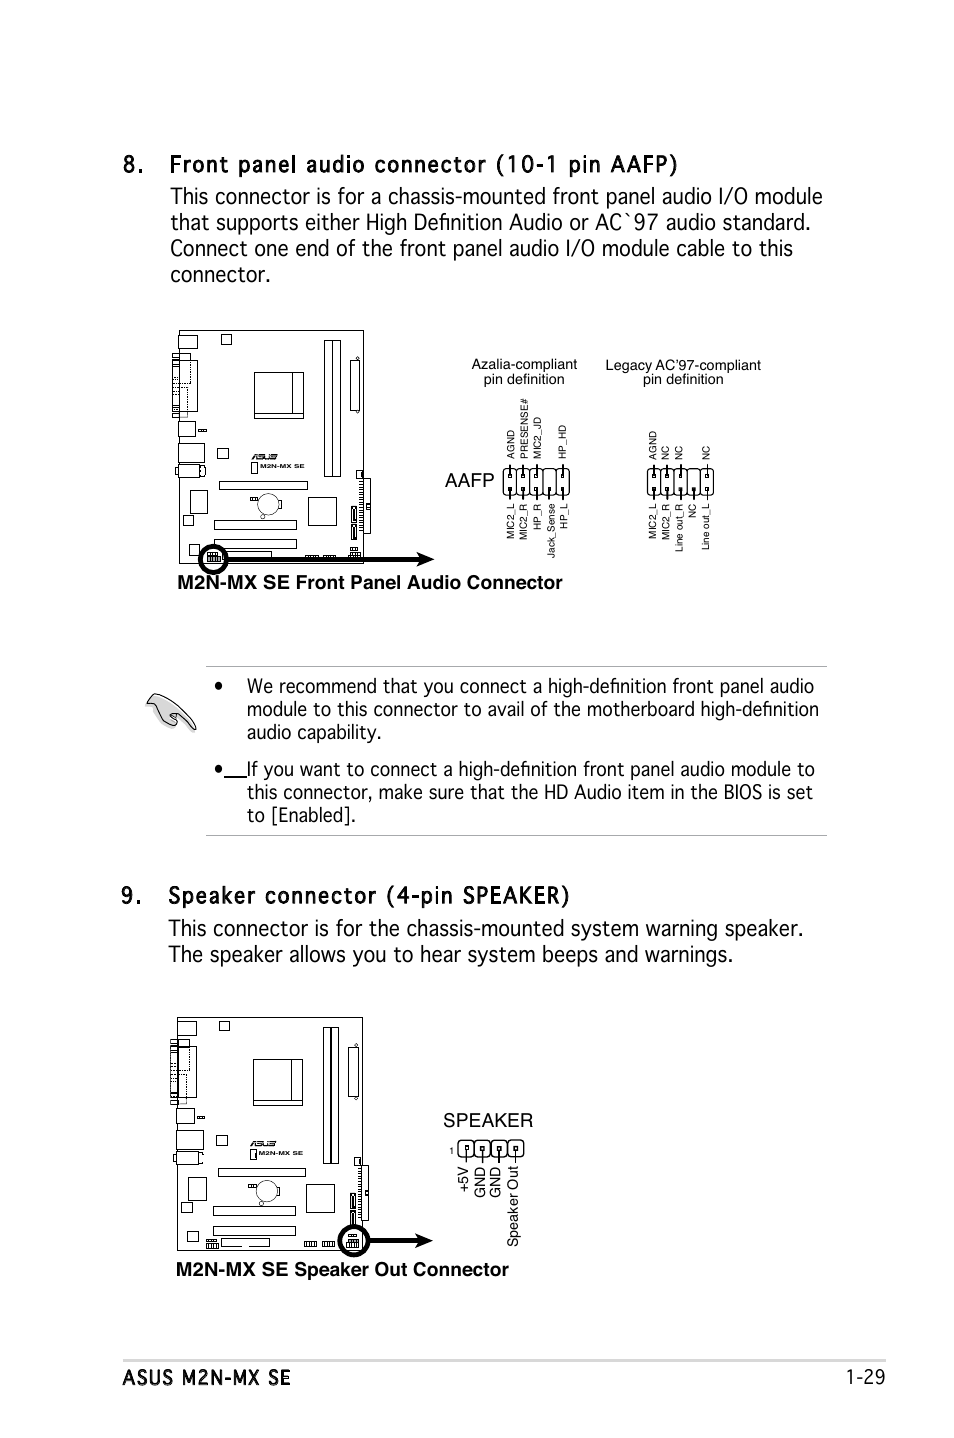 Asus m2n-mx se 1-29, M2n-mx se front panel audio connector, Aafp | Asus M2N-MX  SE User Manual | Page 39 / 88